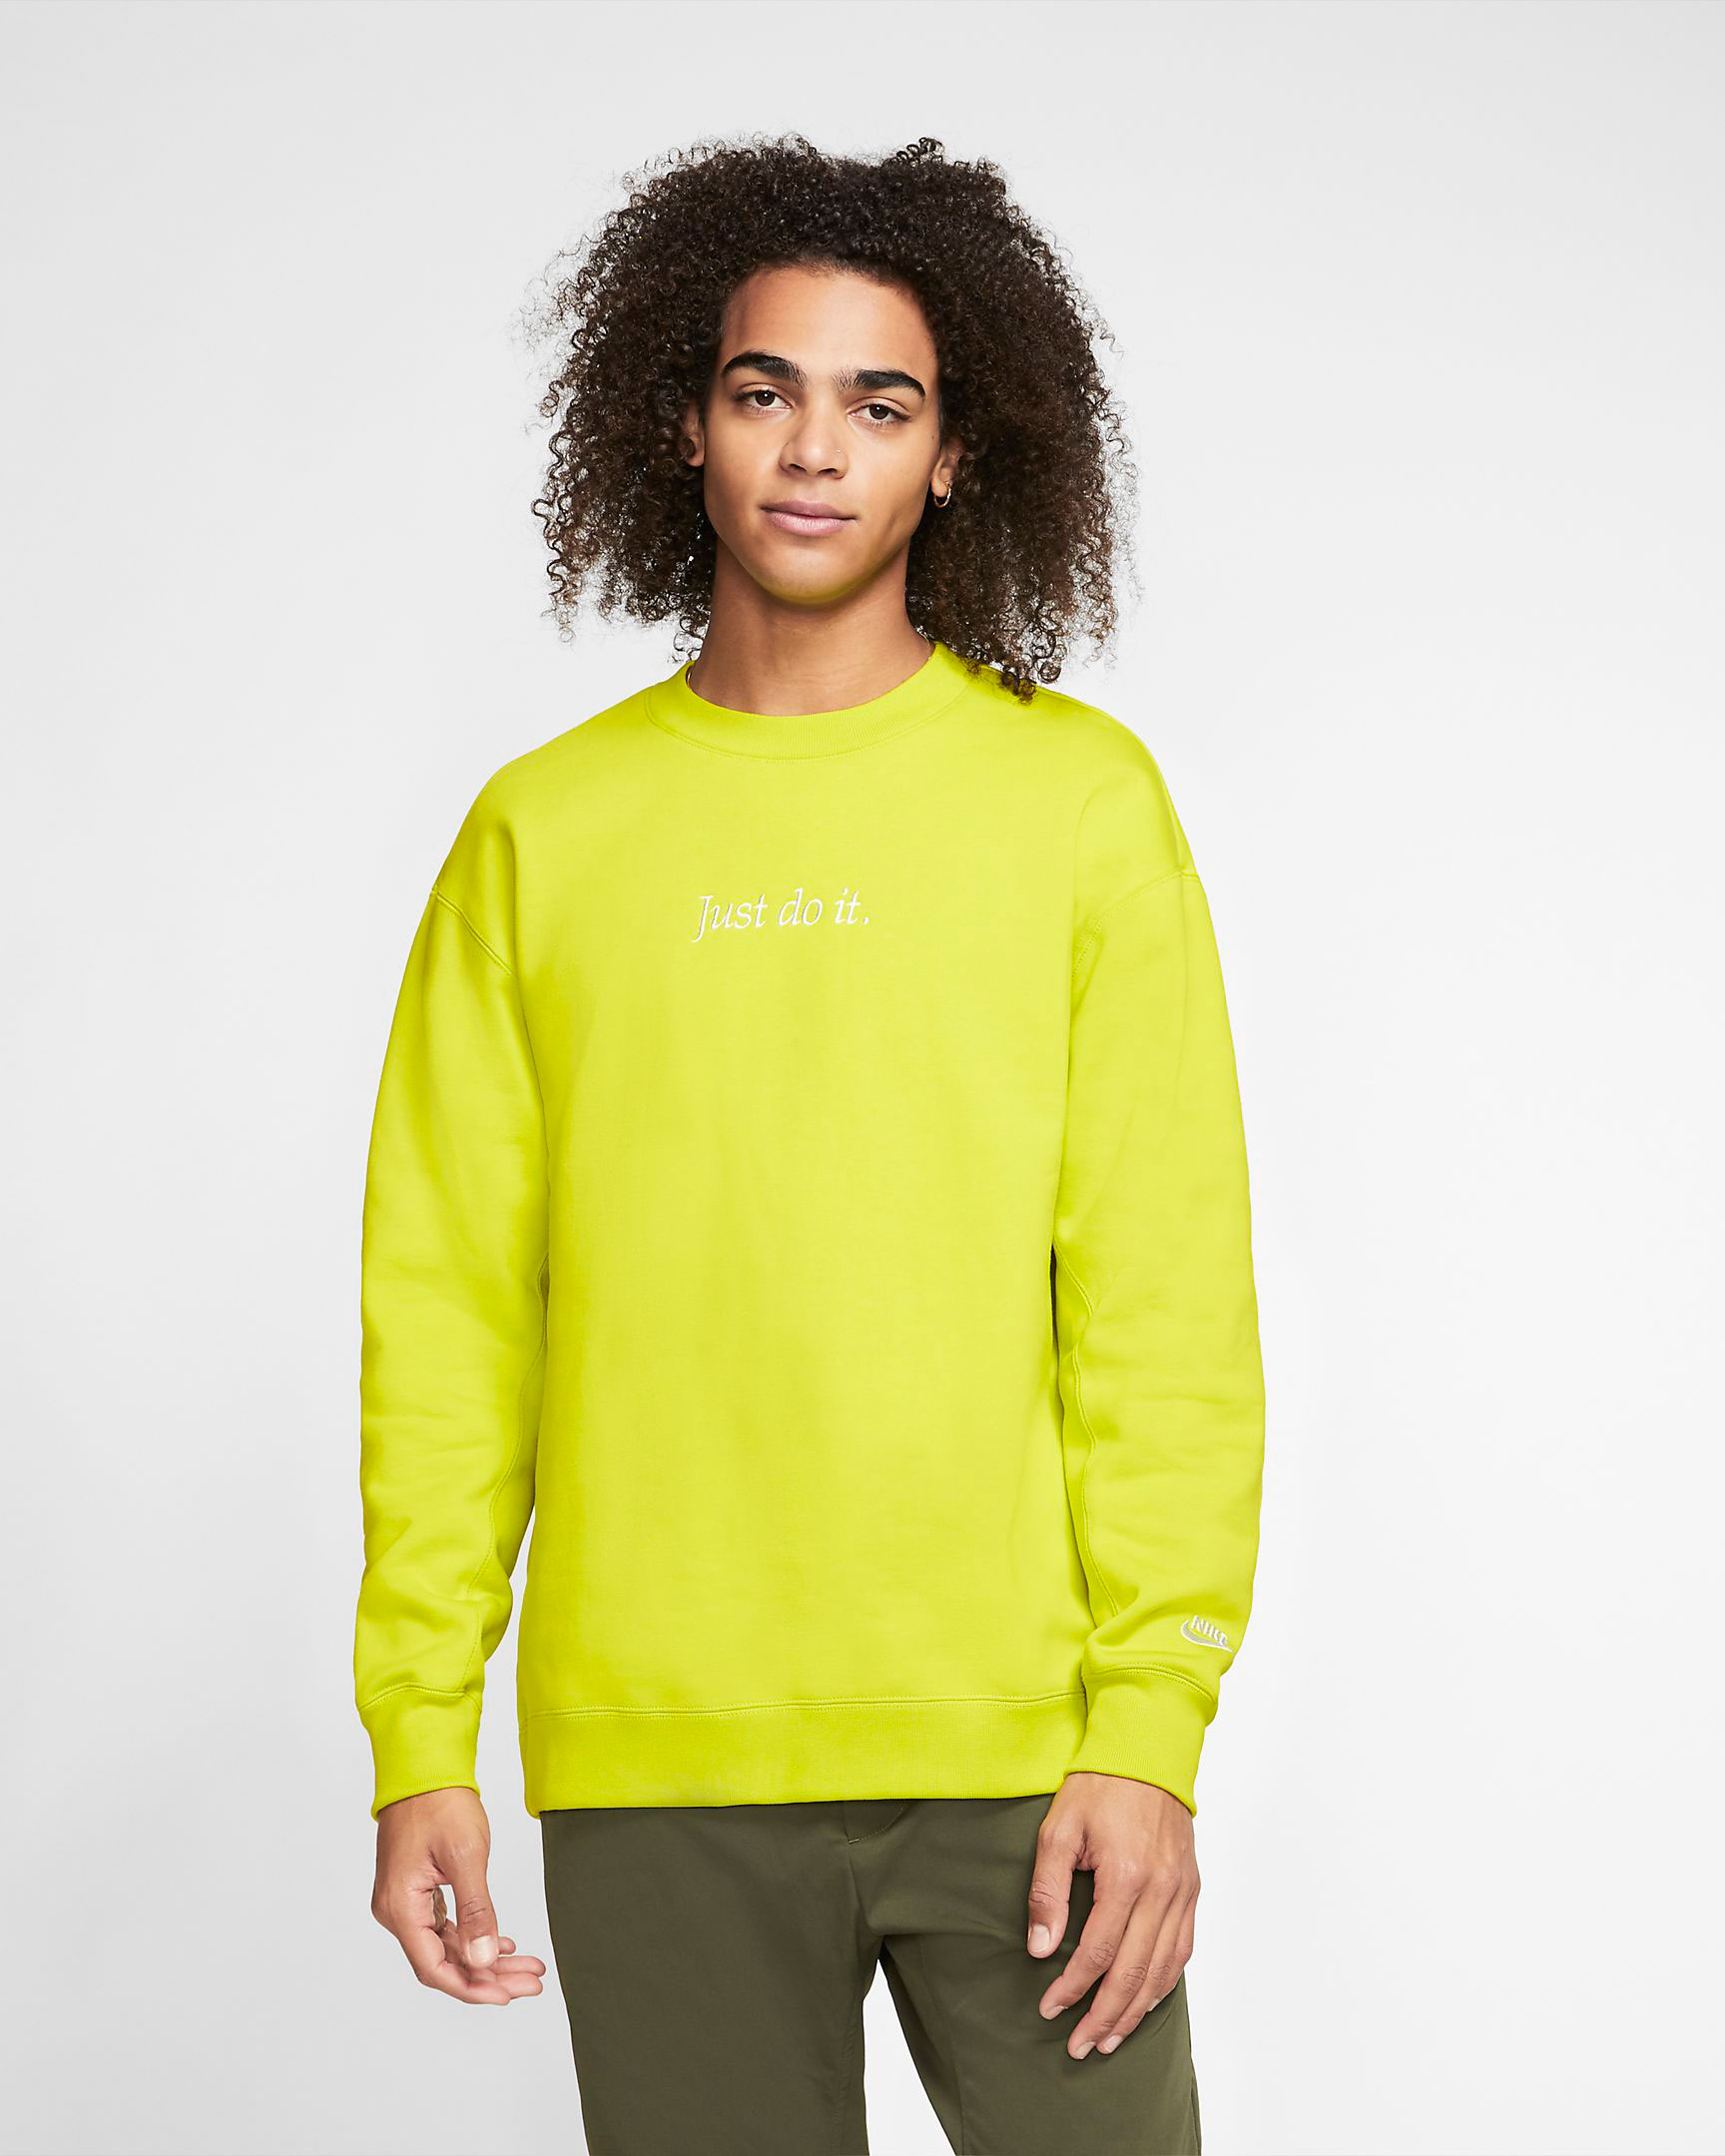 nike-sportswear-jdi-just-do-it-crew-sweatshirt-volt